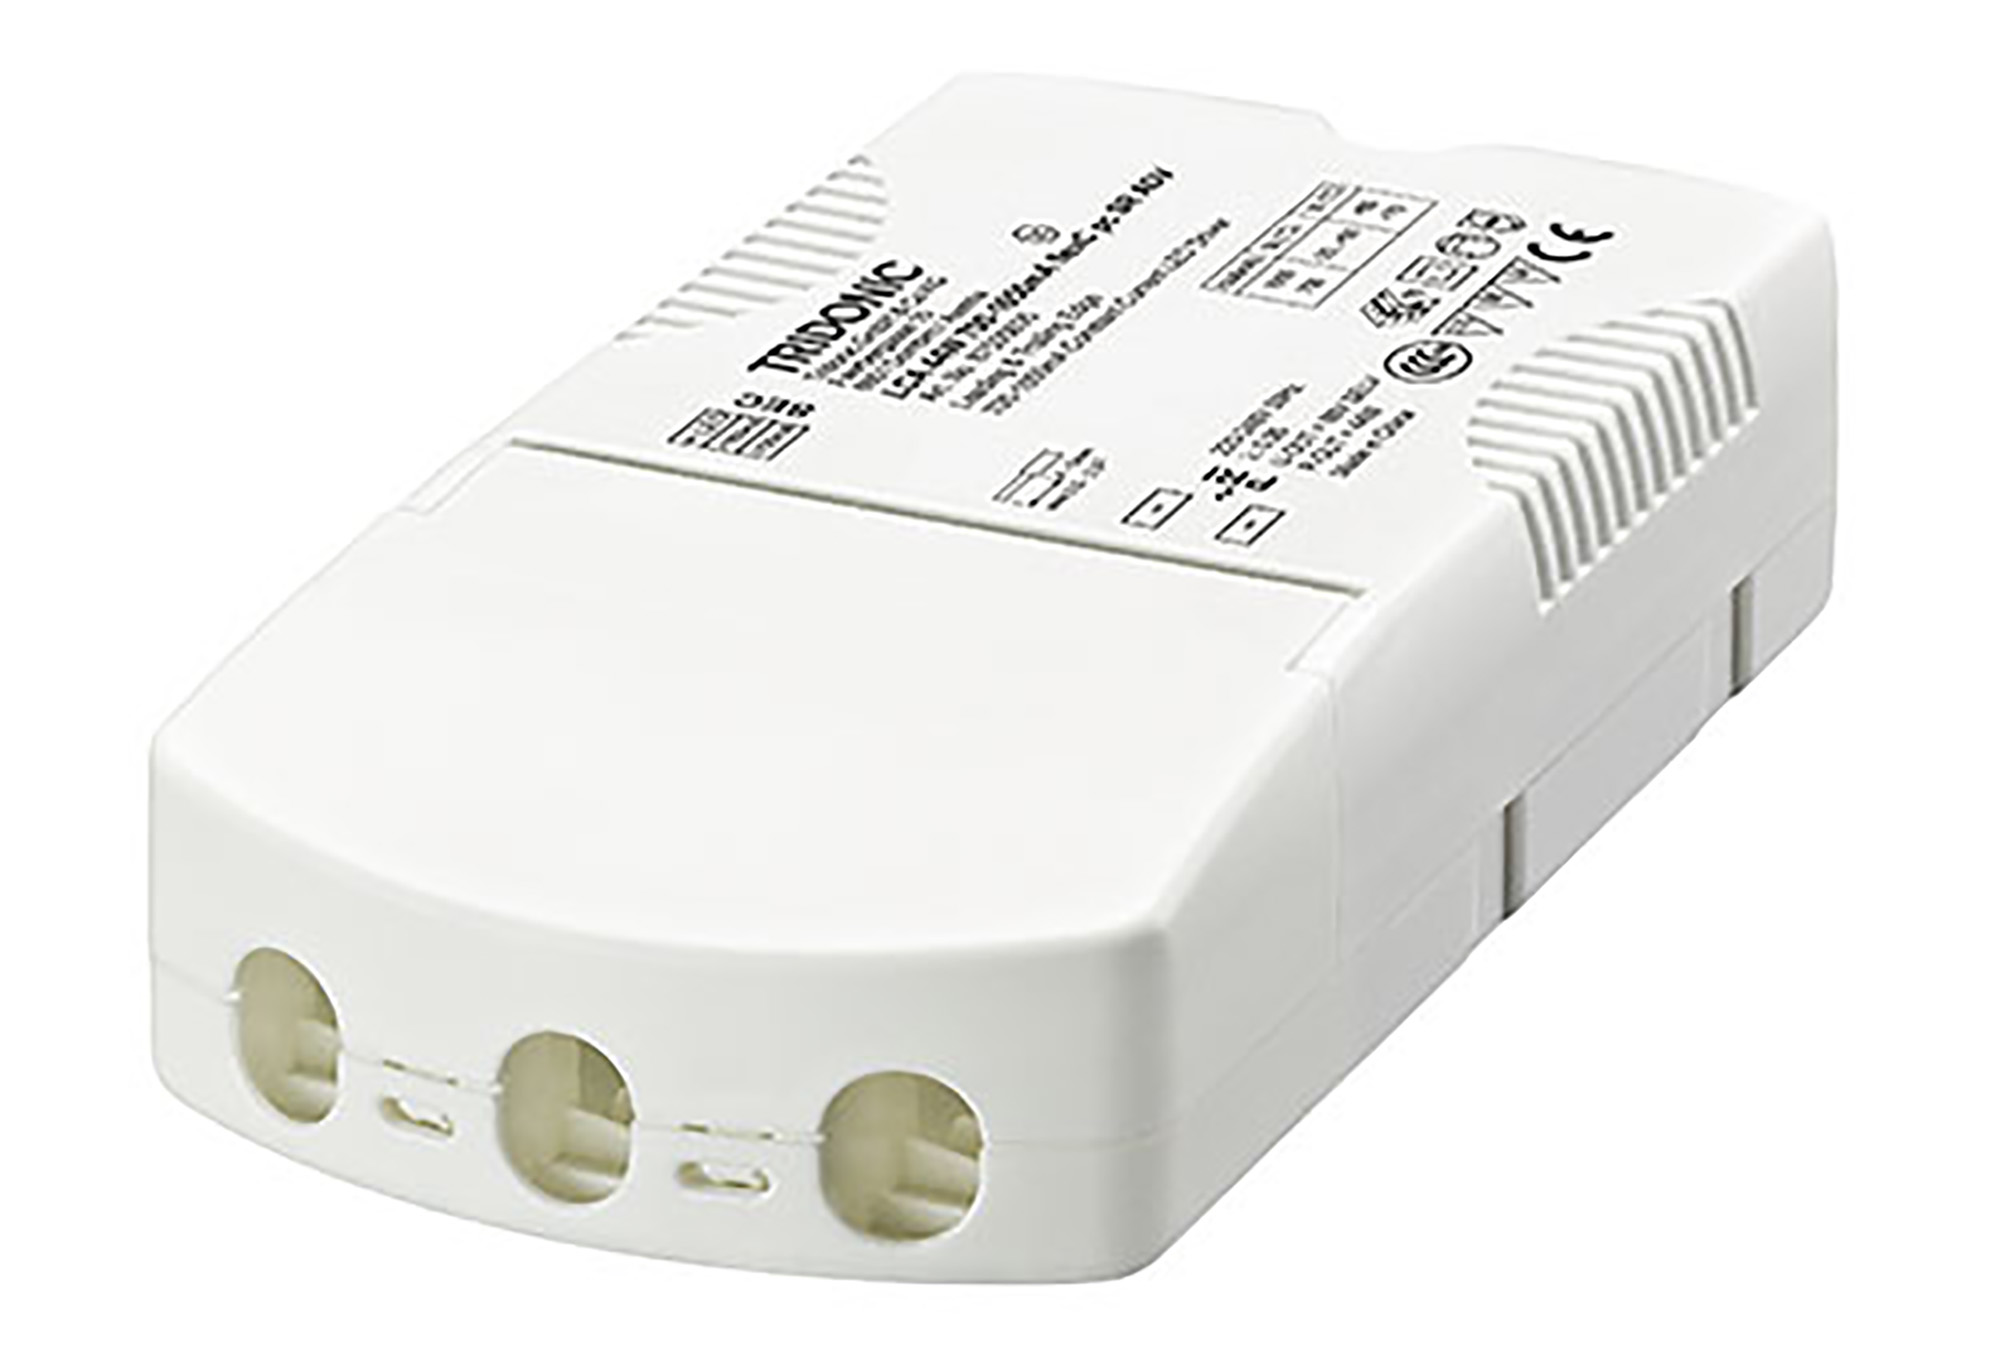 87500605  44W 700-1050mA flexC PH-C SR ADV Phase Cut/1-10V Constant Current LED Driver